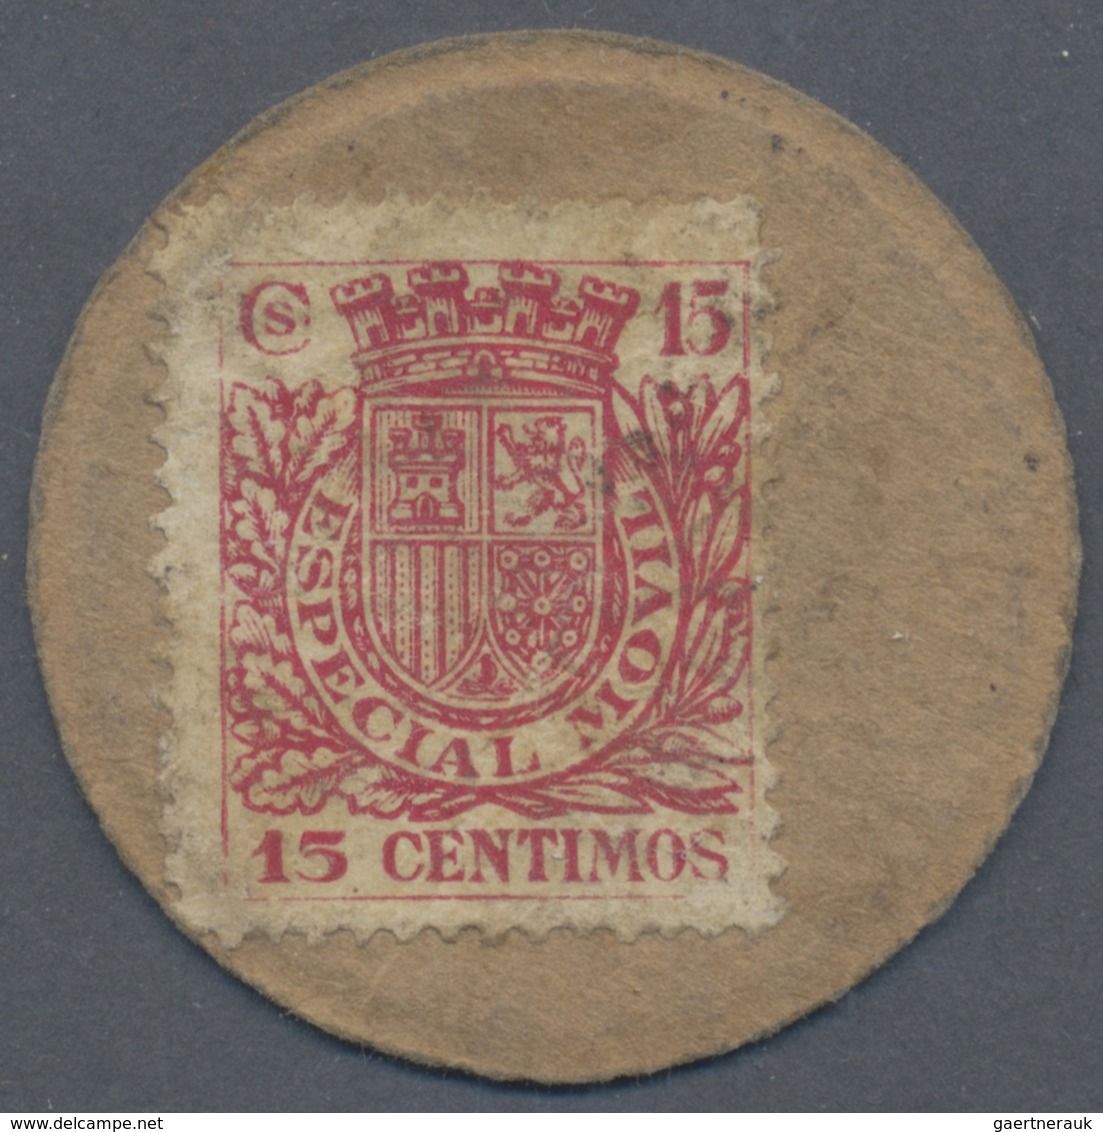 Spain / Spanien: Spain : 1938, civil war stamp money, 25 C. "Numeral" Serie, 25 C. "Portrait" Serie,